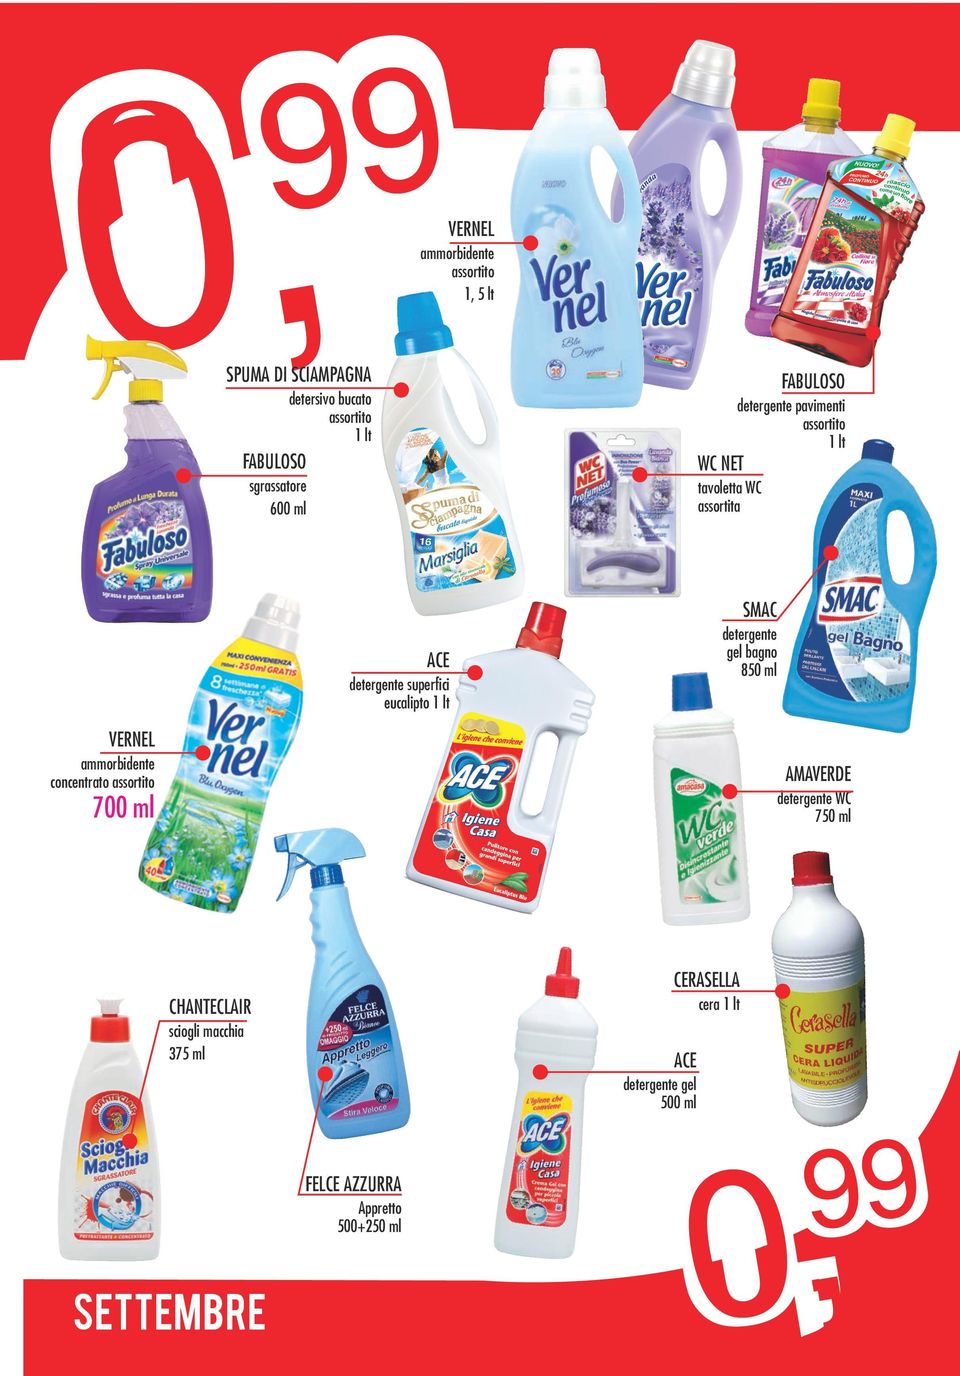 ACE detergente superfici eucalipto 1 lt SMAC detergente gel bagno 850 ml AMAVERDE detergente WC 750 ml